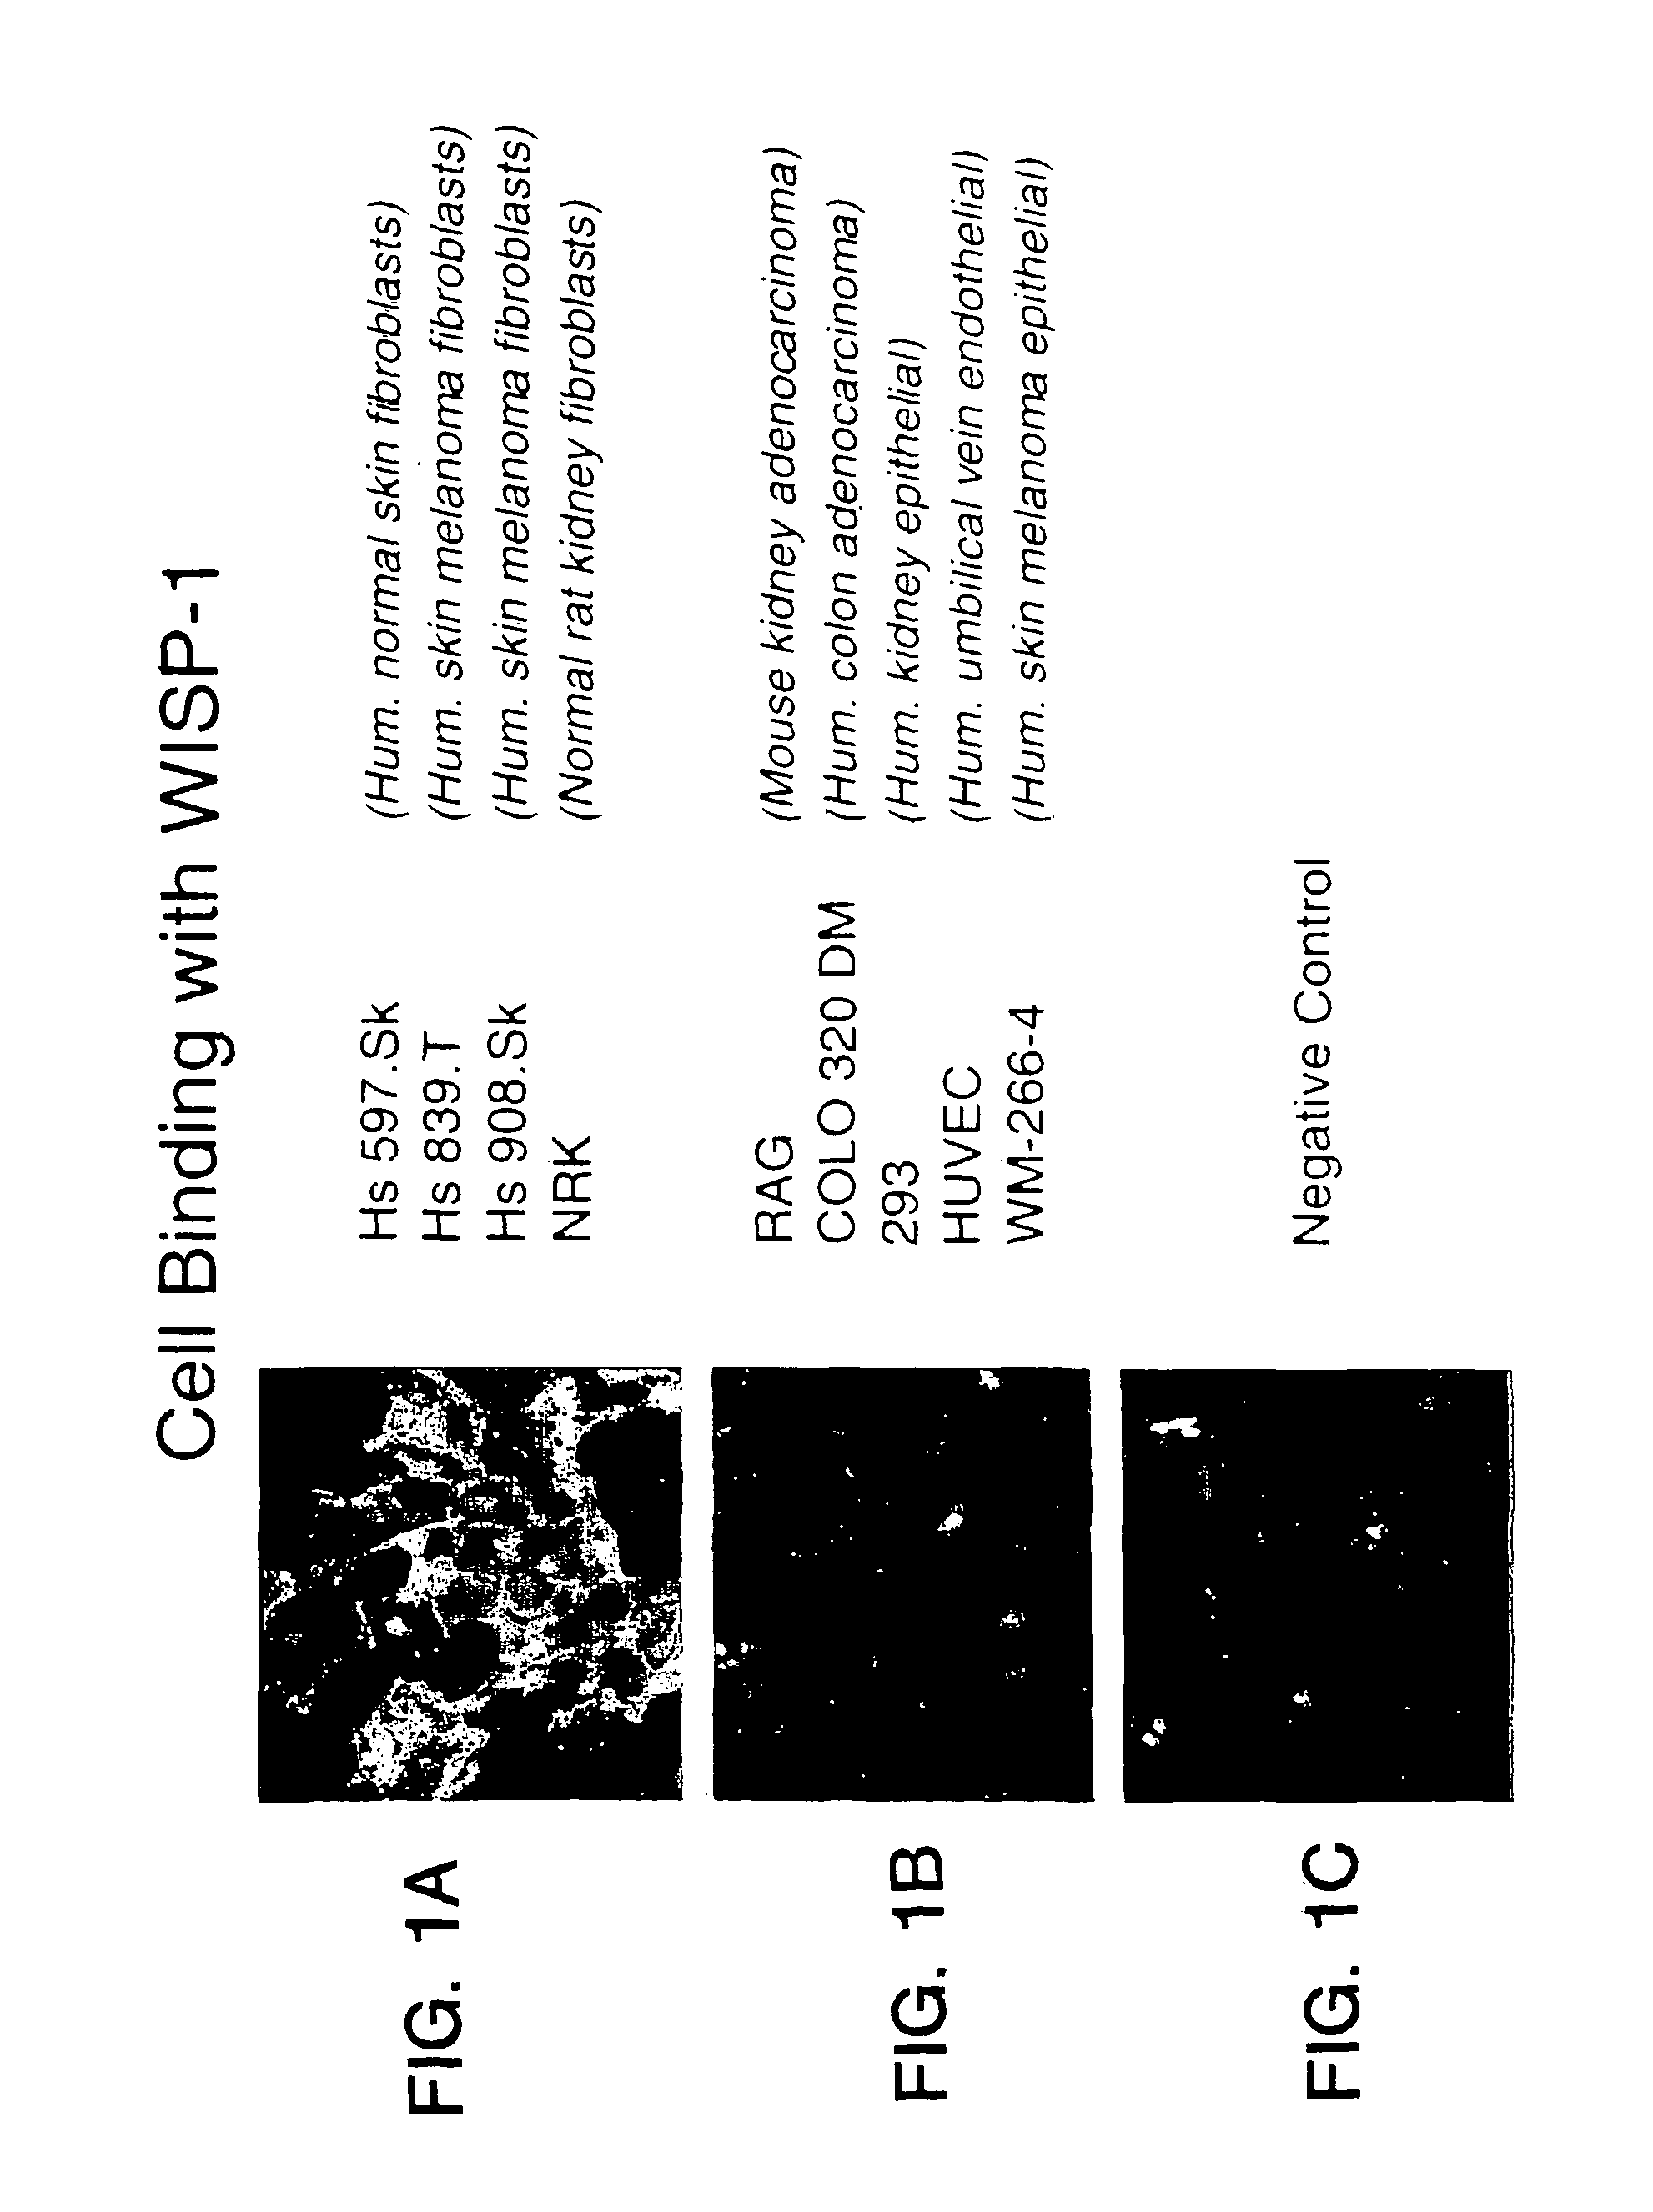 Methods of treatment using wisp polypeptides